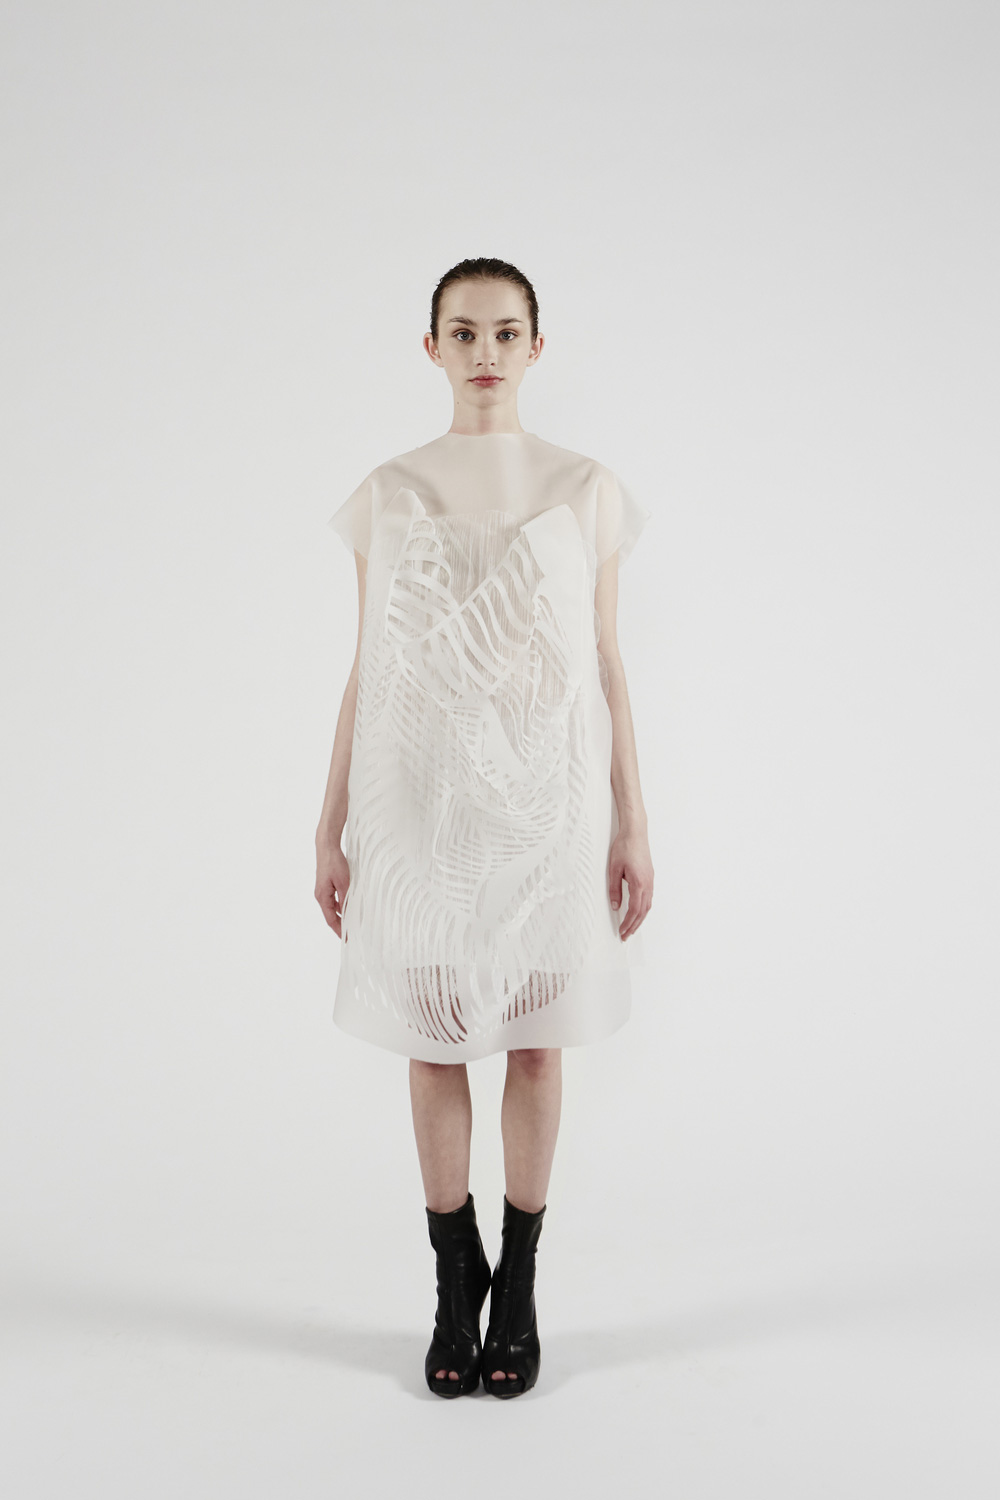 Interactive Dresses by Ying Gao – Fubiz Media